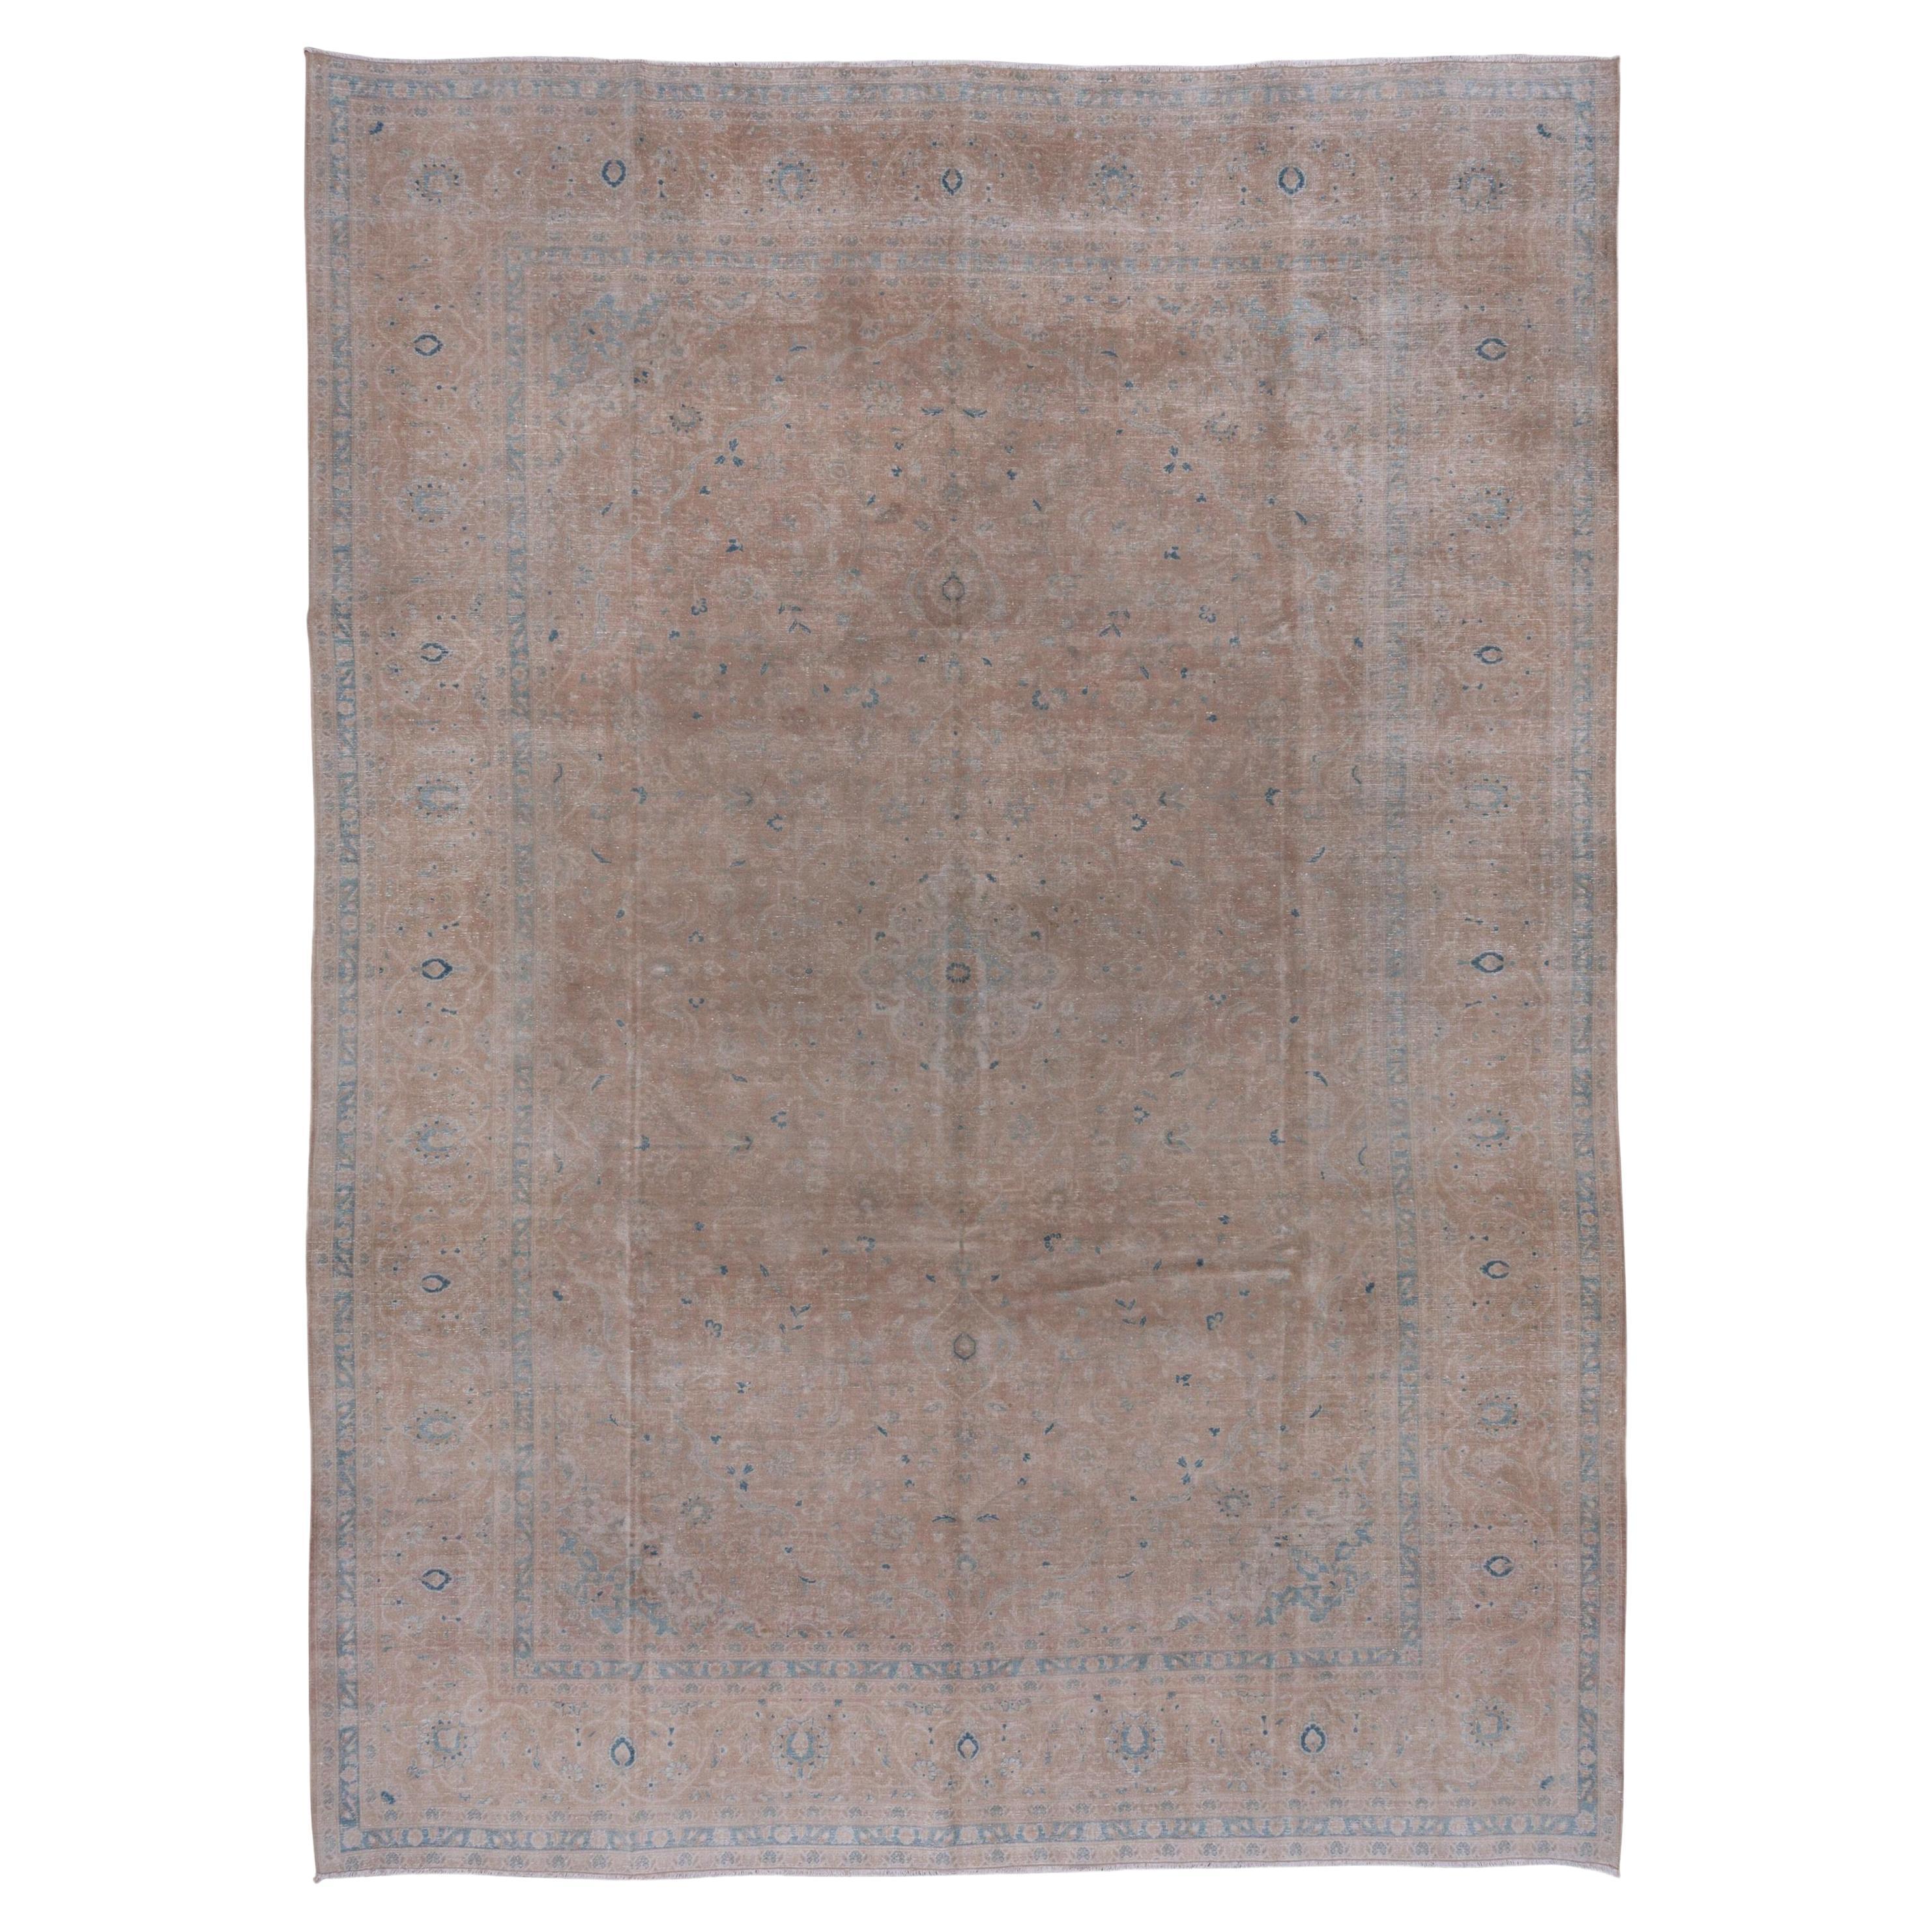 Neutral Persian Kashan Carpet, Blue Borders, Light Brown Palette For Sale